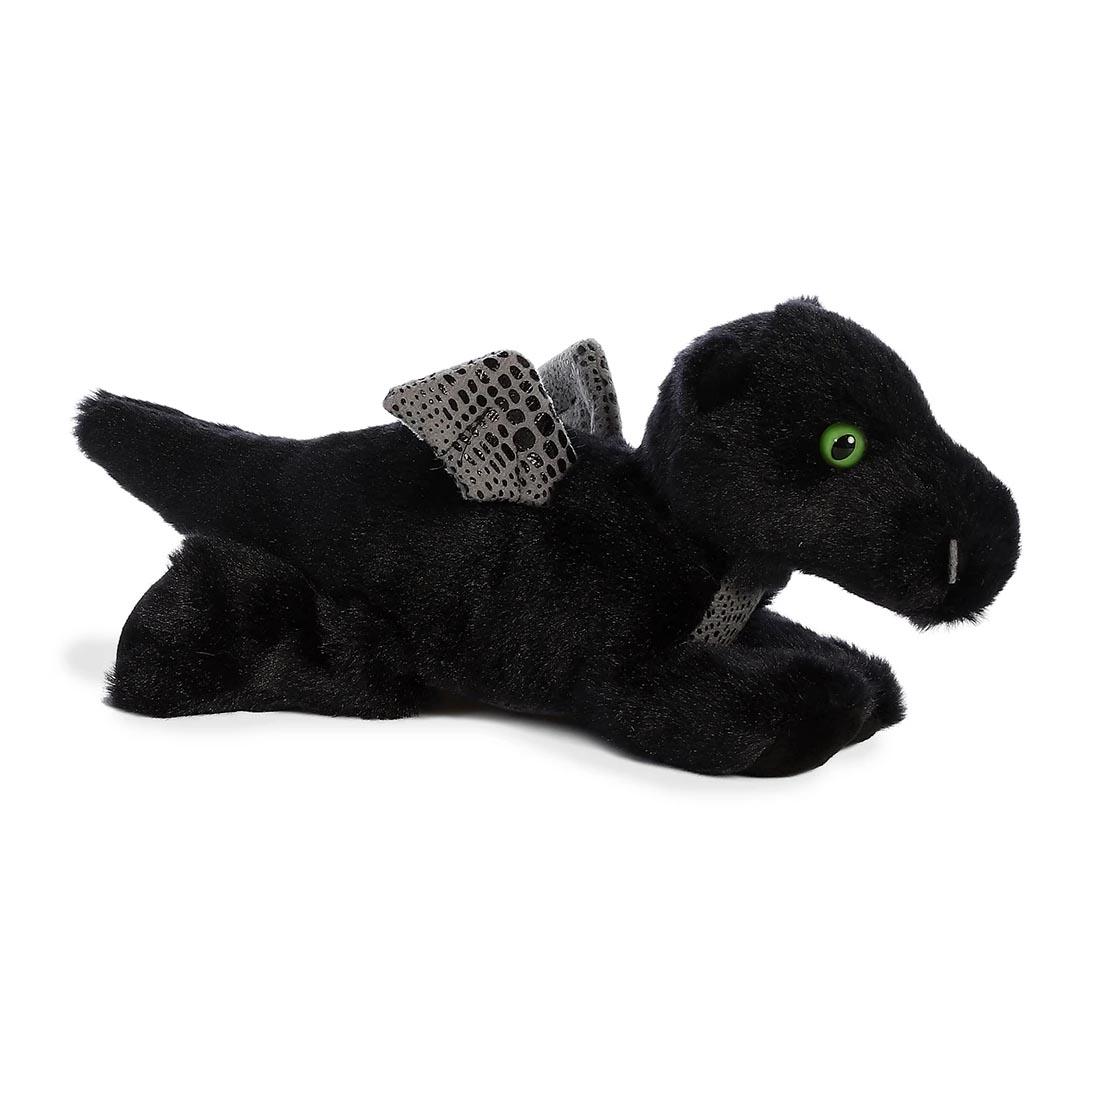 black dragon stuffed animal